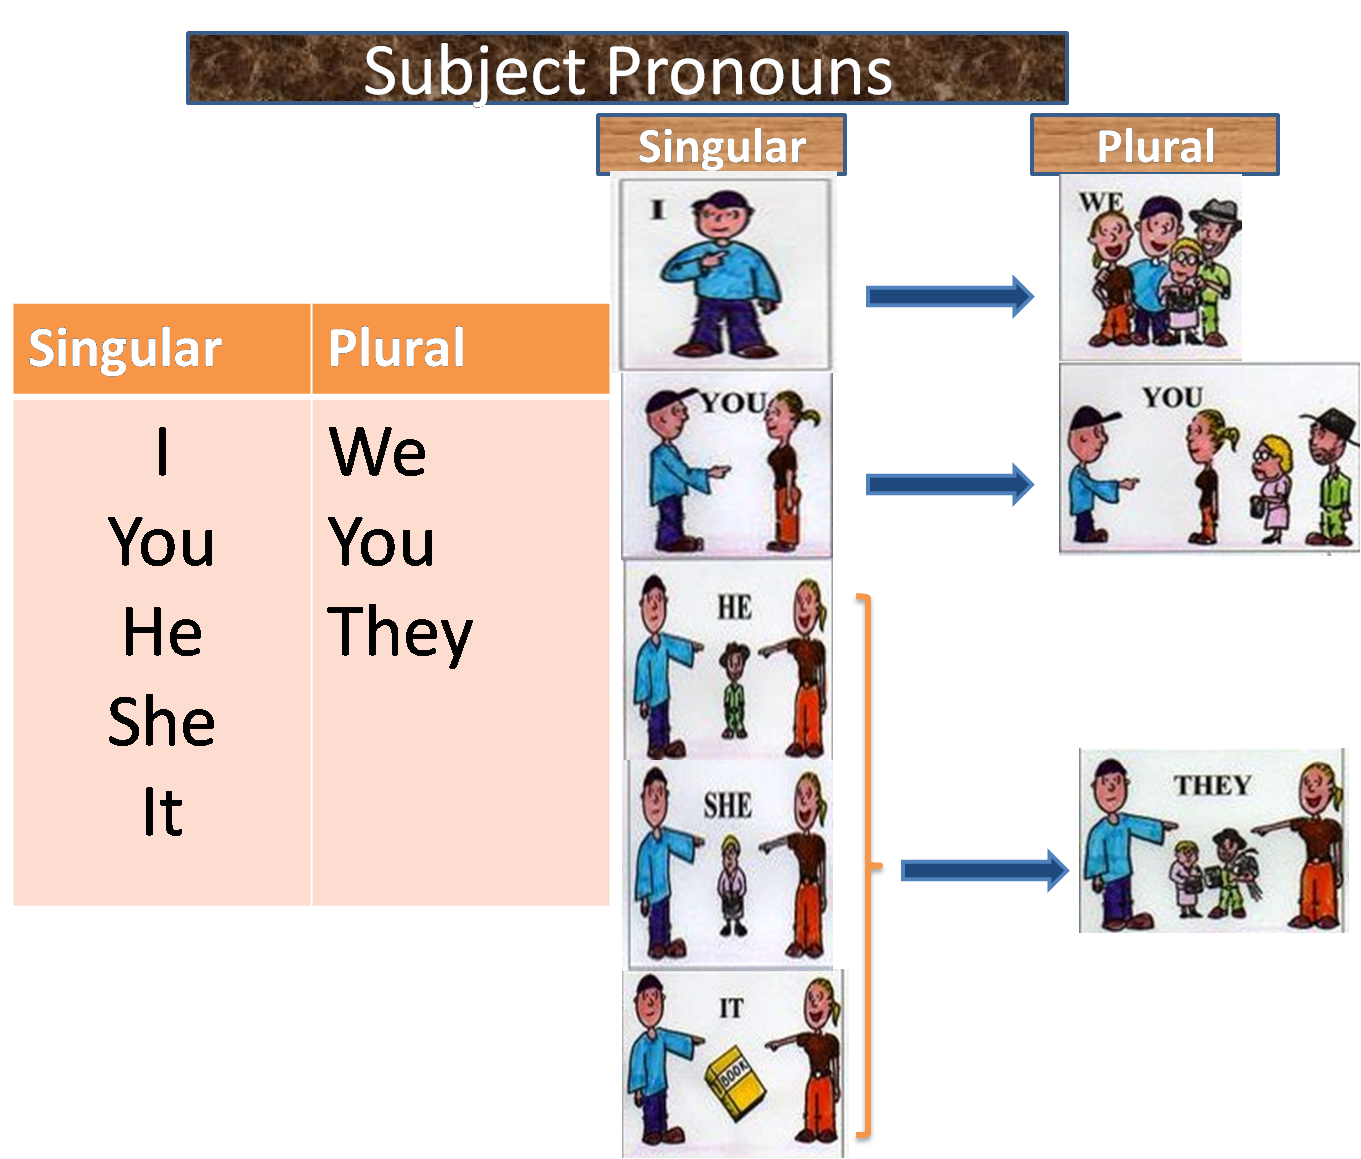 Personal pronouns таблица. Subject pronouns в английском языке. Subject pronouns правило. Упражнения на тему subject pronouns. Wordwall spotlight plurals